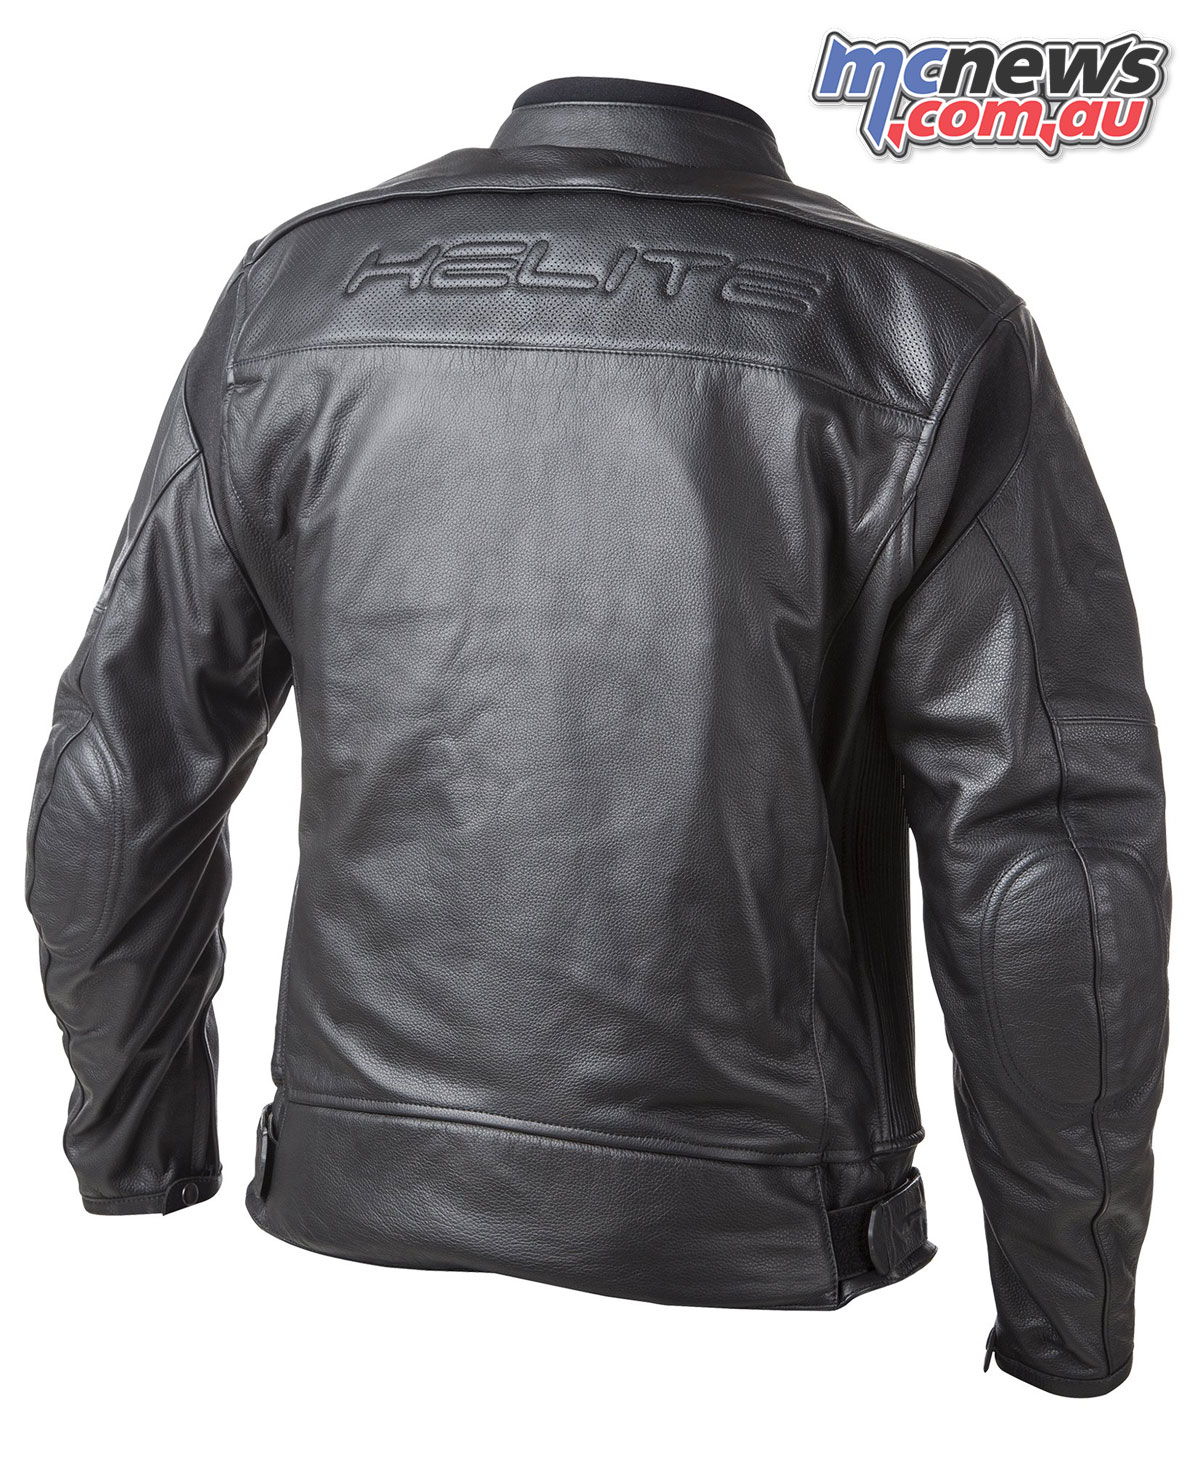 Turtle HiViz Helite - Premium protector for riders - Rider jacket protector